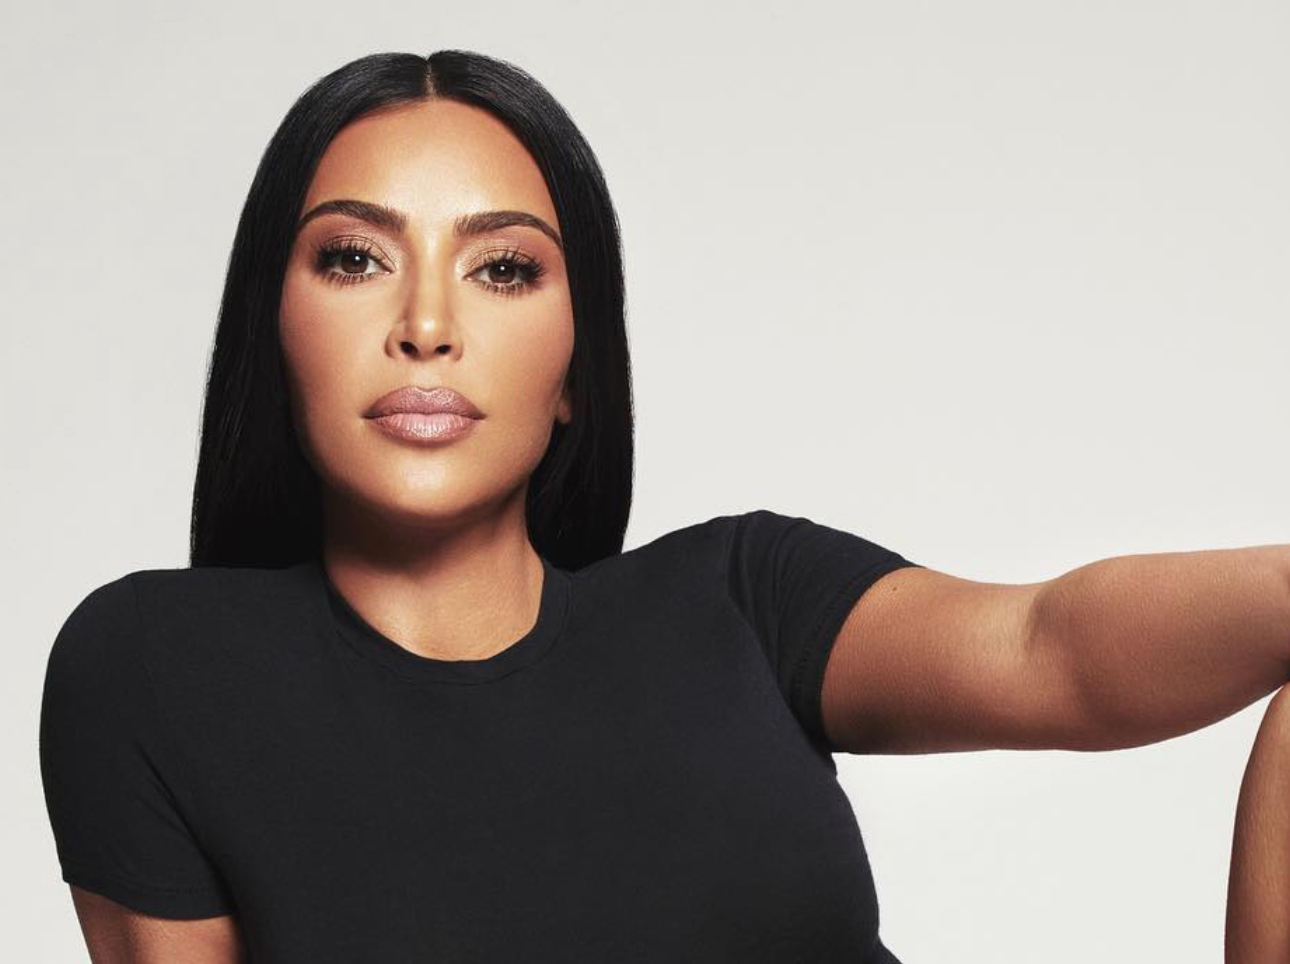 Kim Kardashian's SKIMS to Open First DMV Location - The MoCo Show